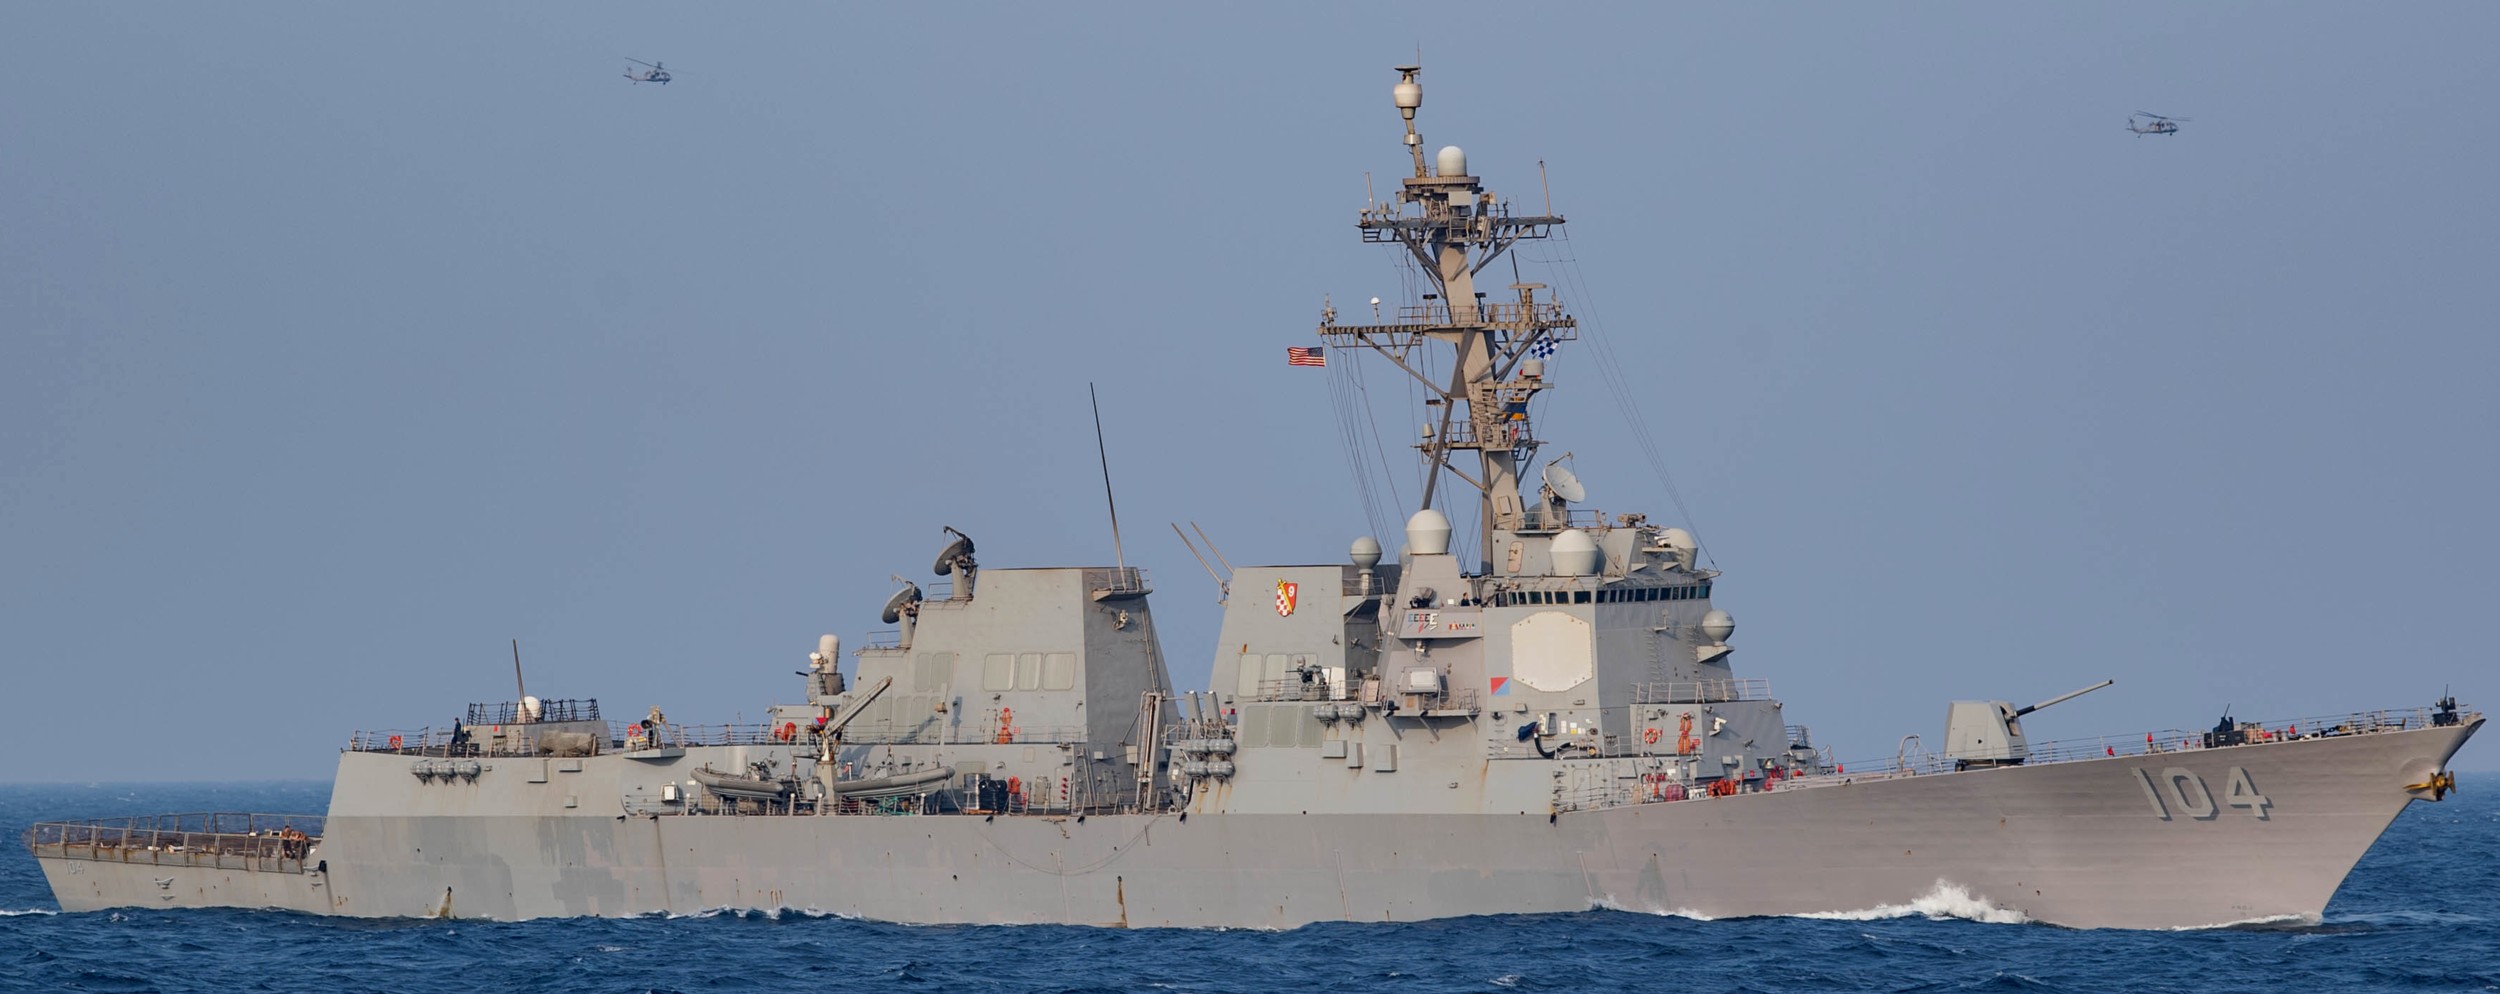 ddg-104 uss sterett arleigh burke class guided missile destroyer aegis us navy exercise malabar arabian sea 76